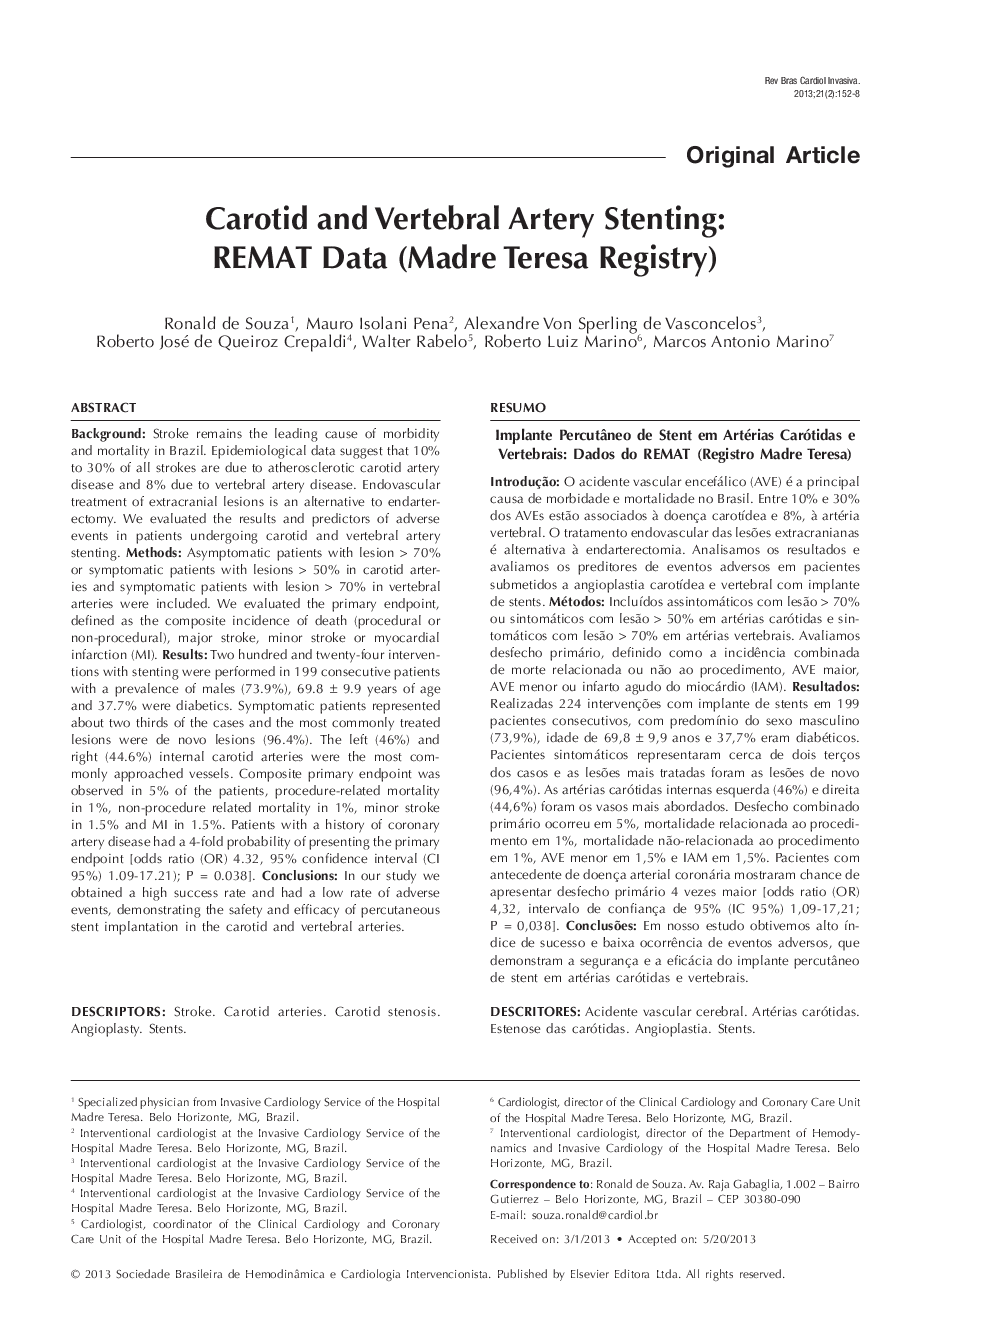 Carotid and Vertebral Artery Stenting: REMAT Data (Madre Teresa Registry)